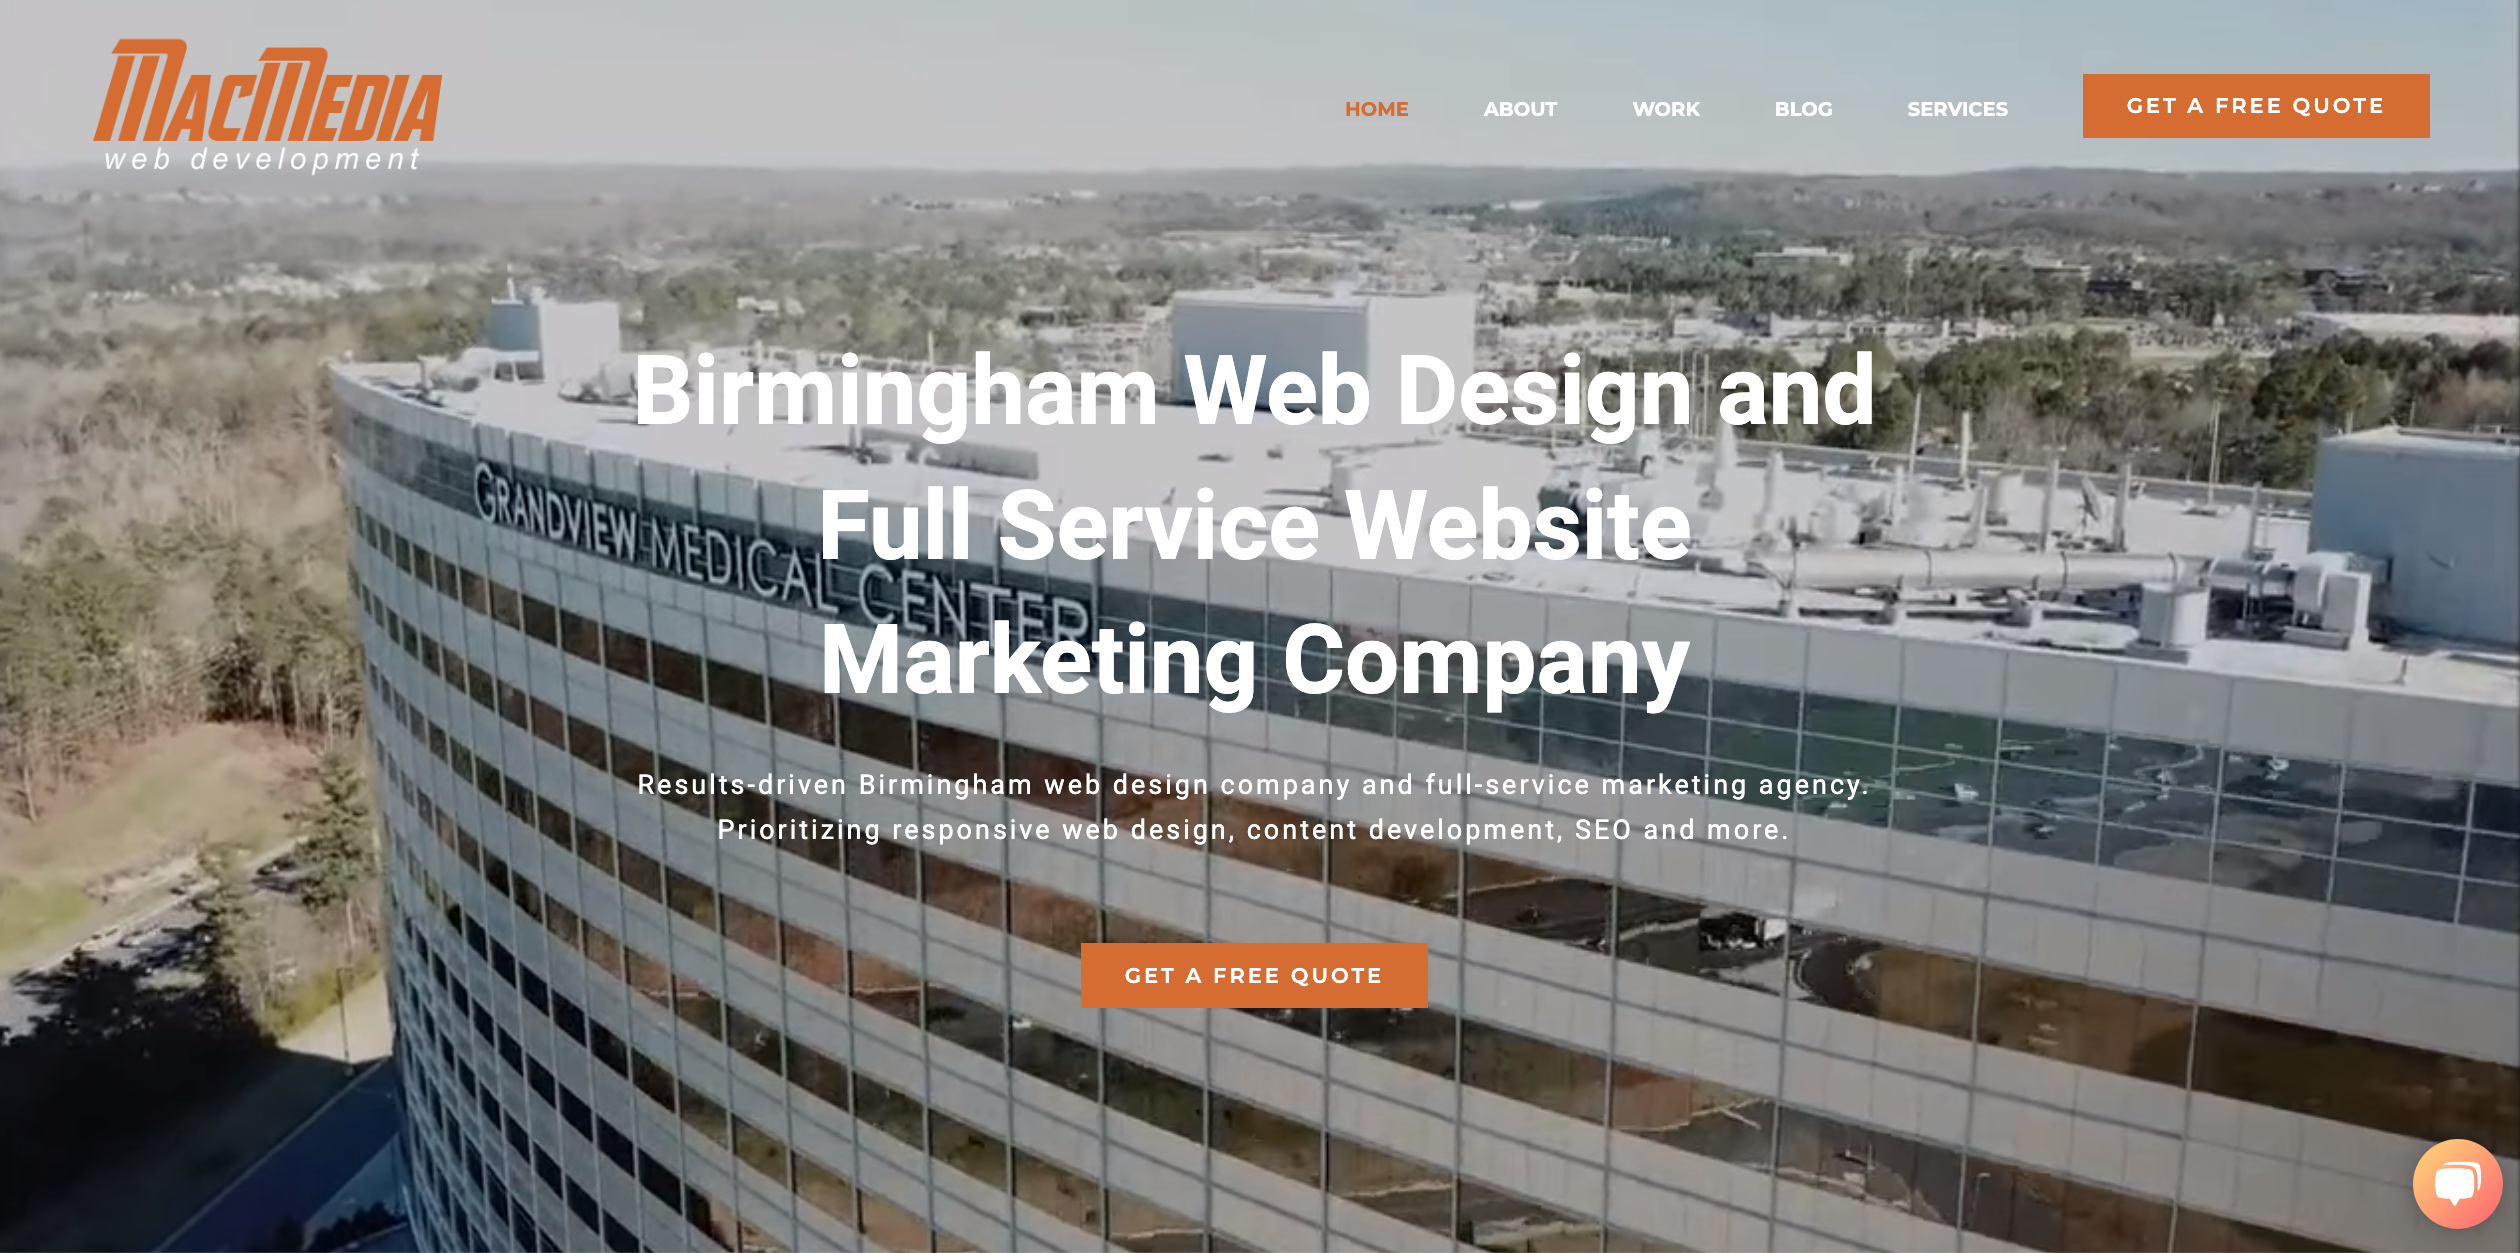 Web Design Company Birmingham, Alabama